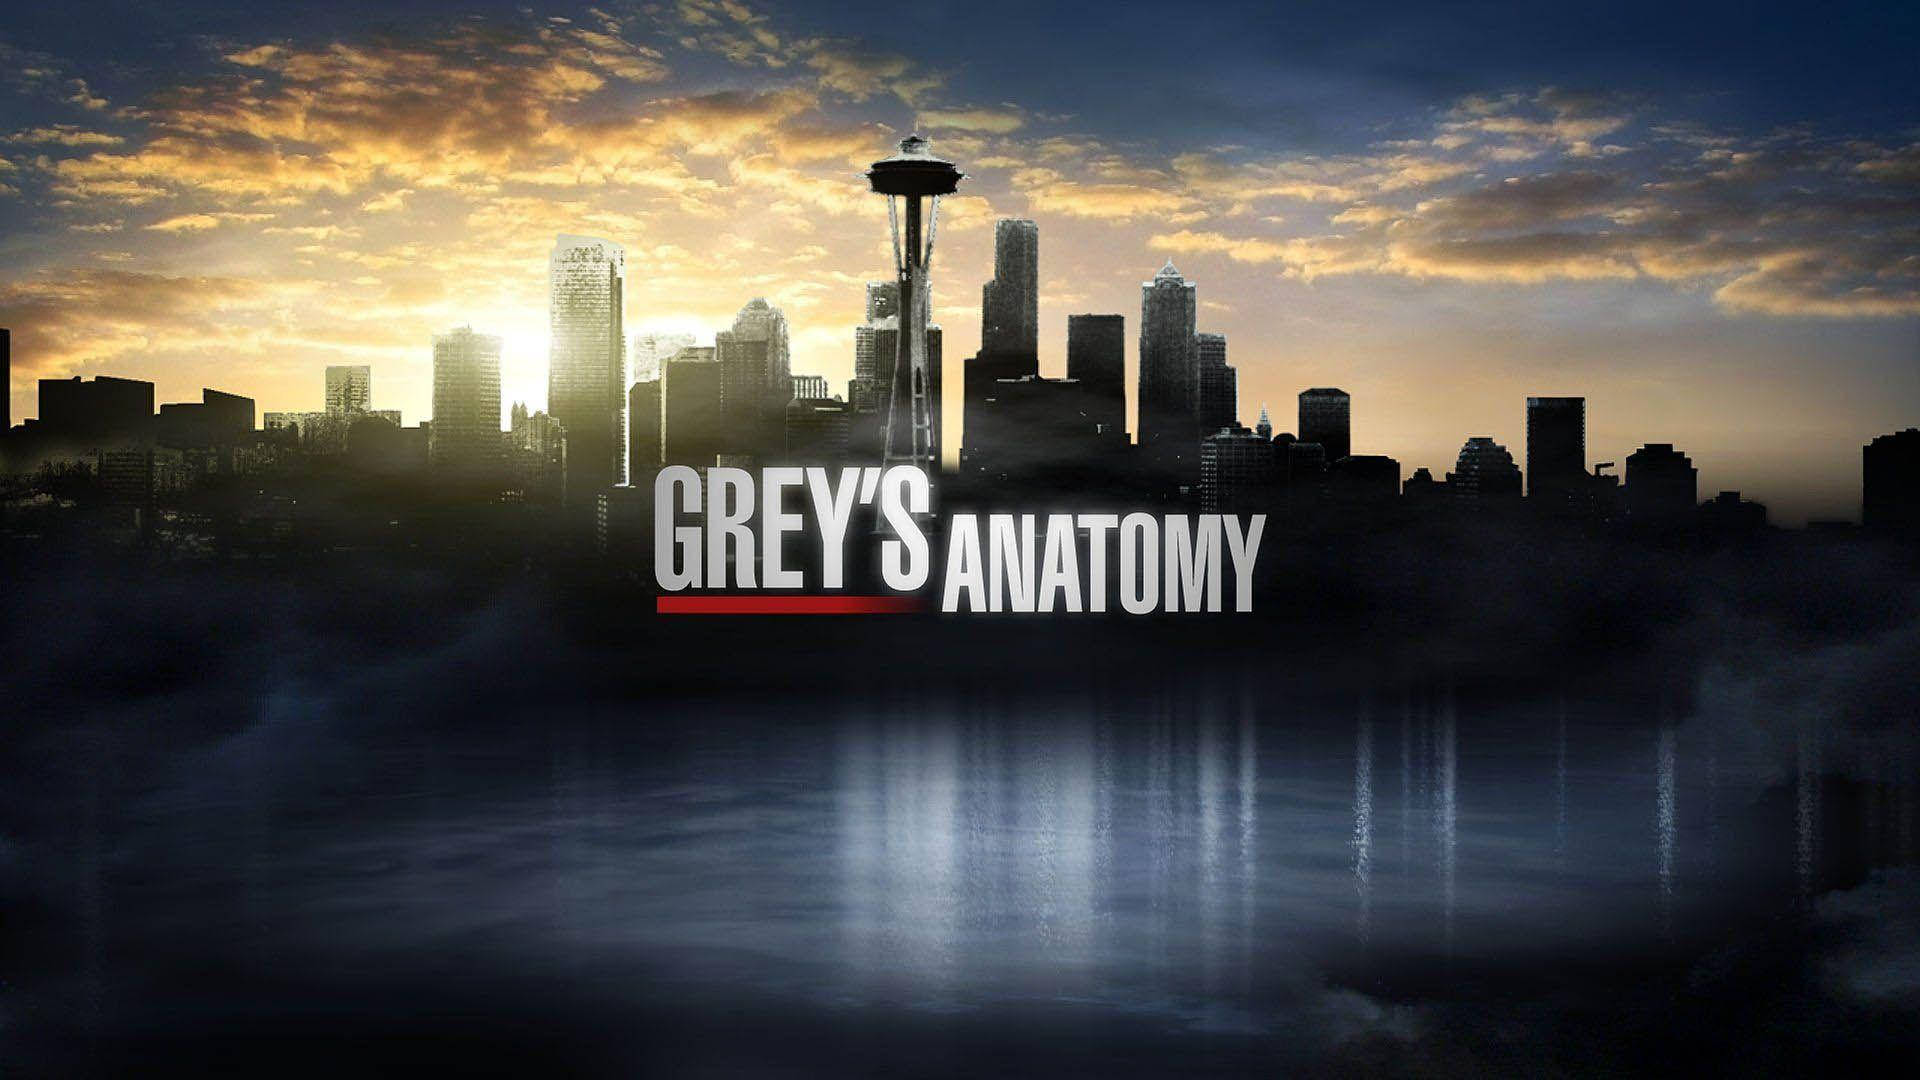 Grey's Anatomy Space Needle Wallpaper